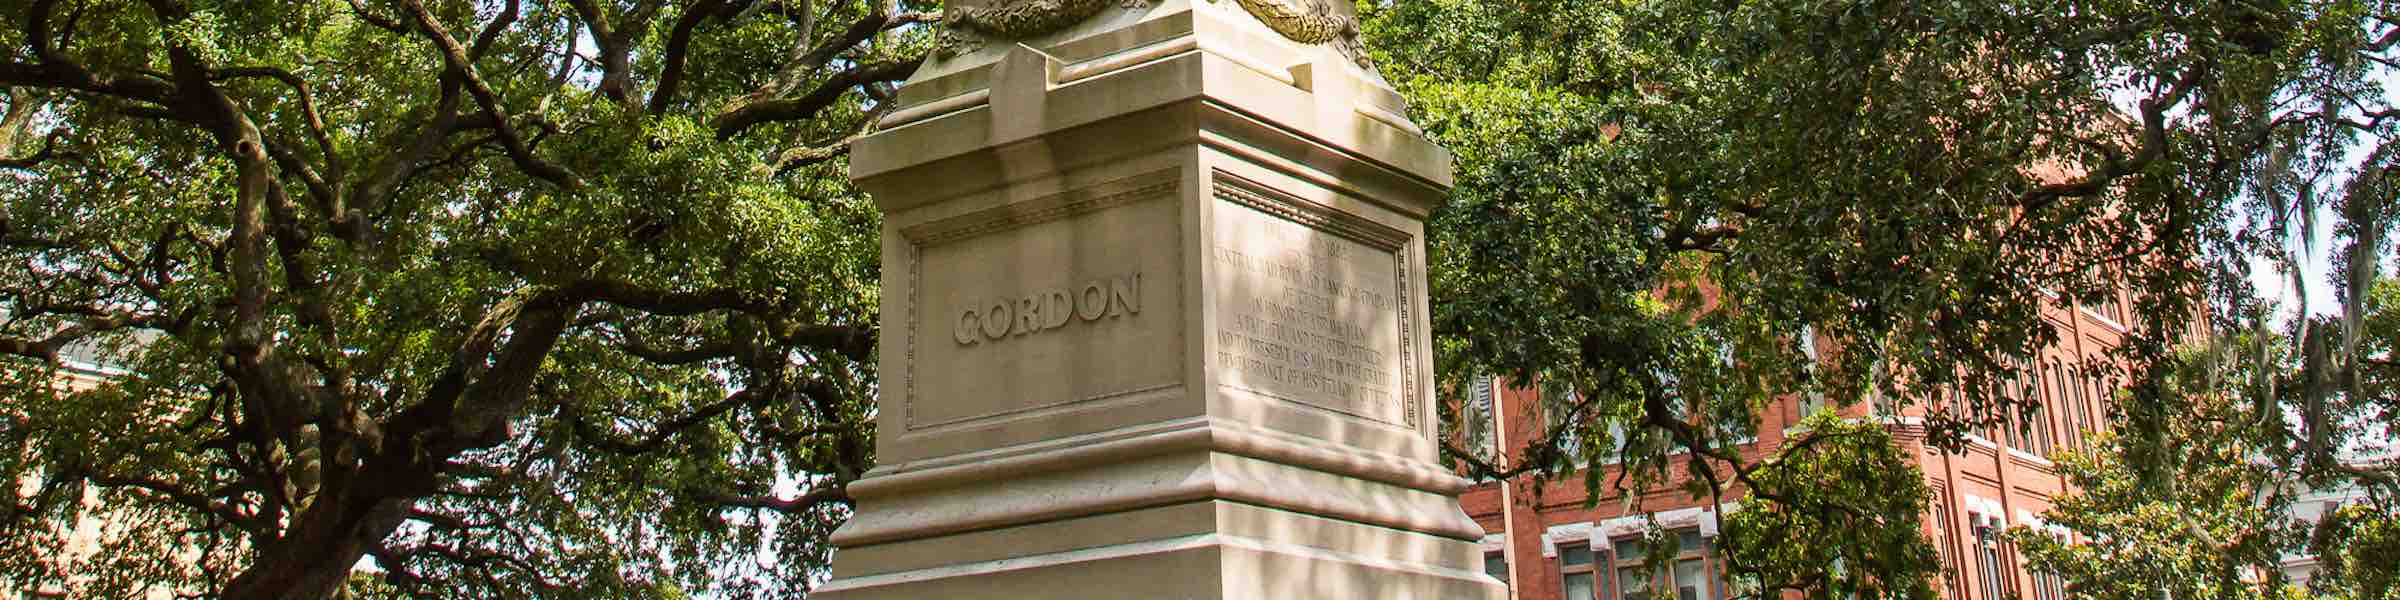 Base of the Gordon Monument in Wright Square, Savannah, GA.